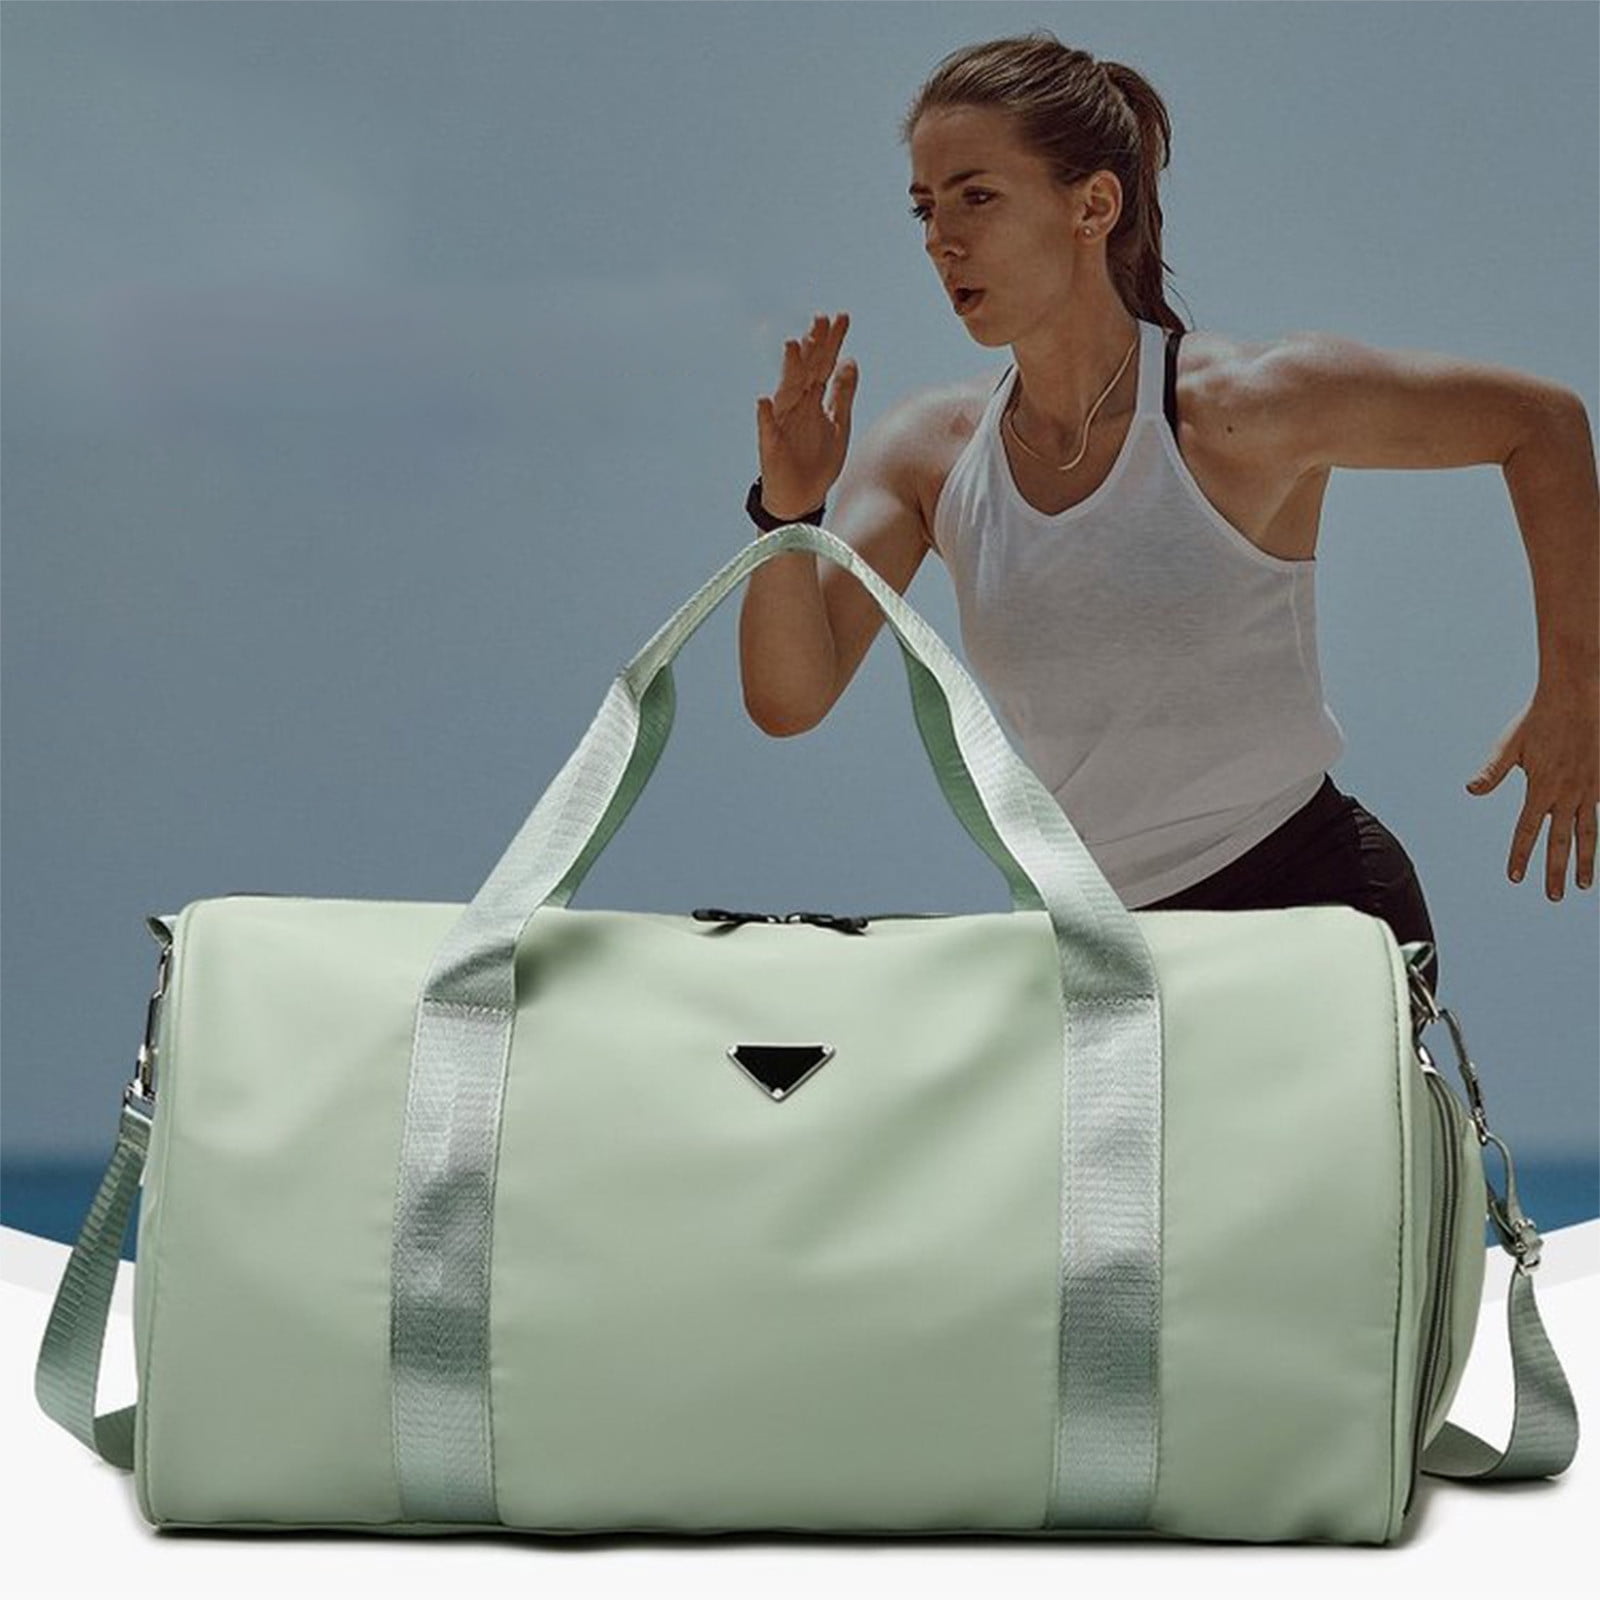 Gym Sports Duffle Bag - Waterproof Travel Duffel Bag With Wet